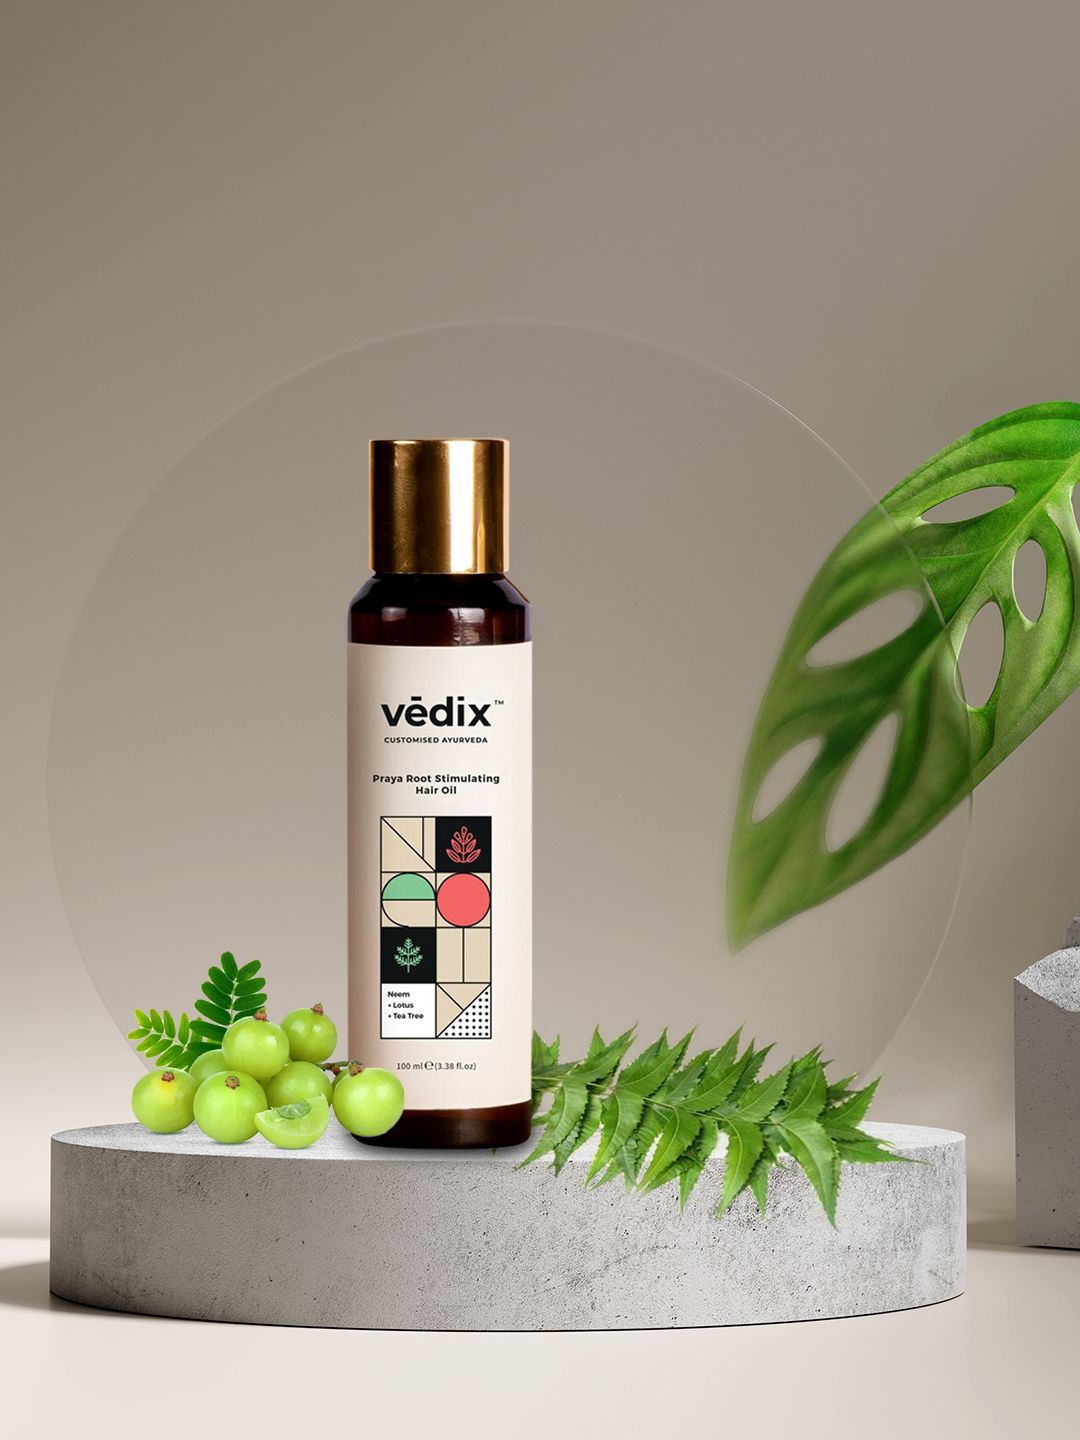 VEDIX Customized Ayurvedic Praya Root Stimulating Hair Oil for Oily Scalp - Curly Hair Price in India